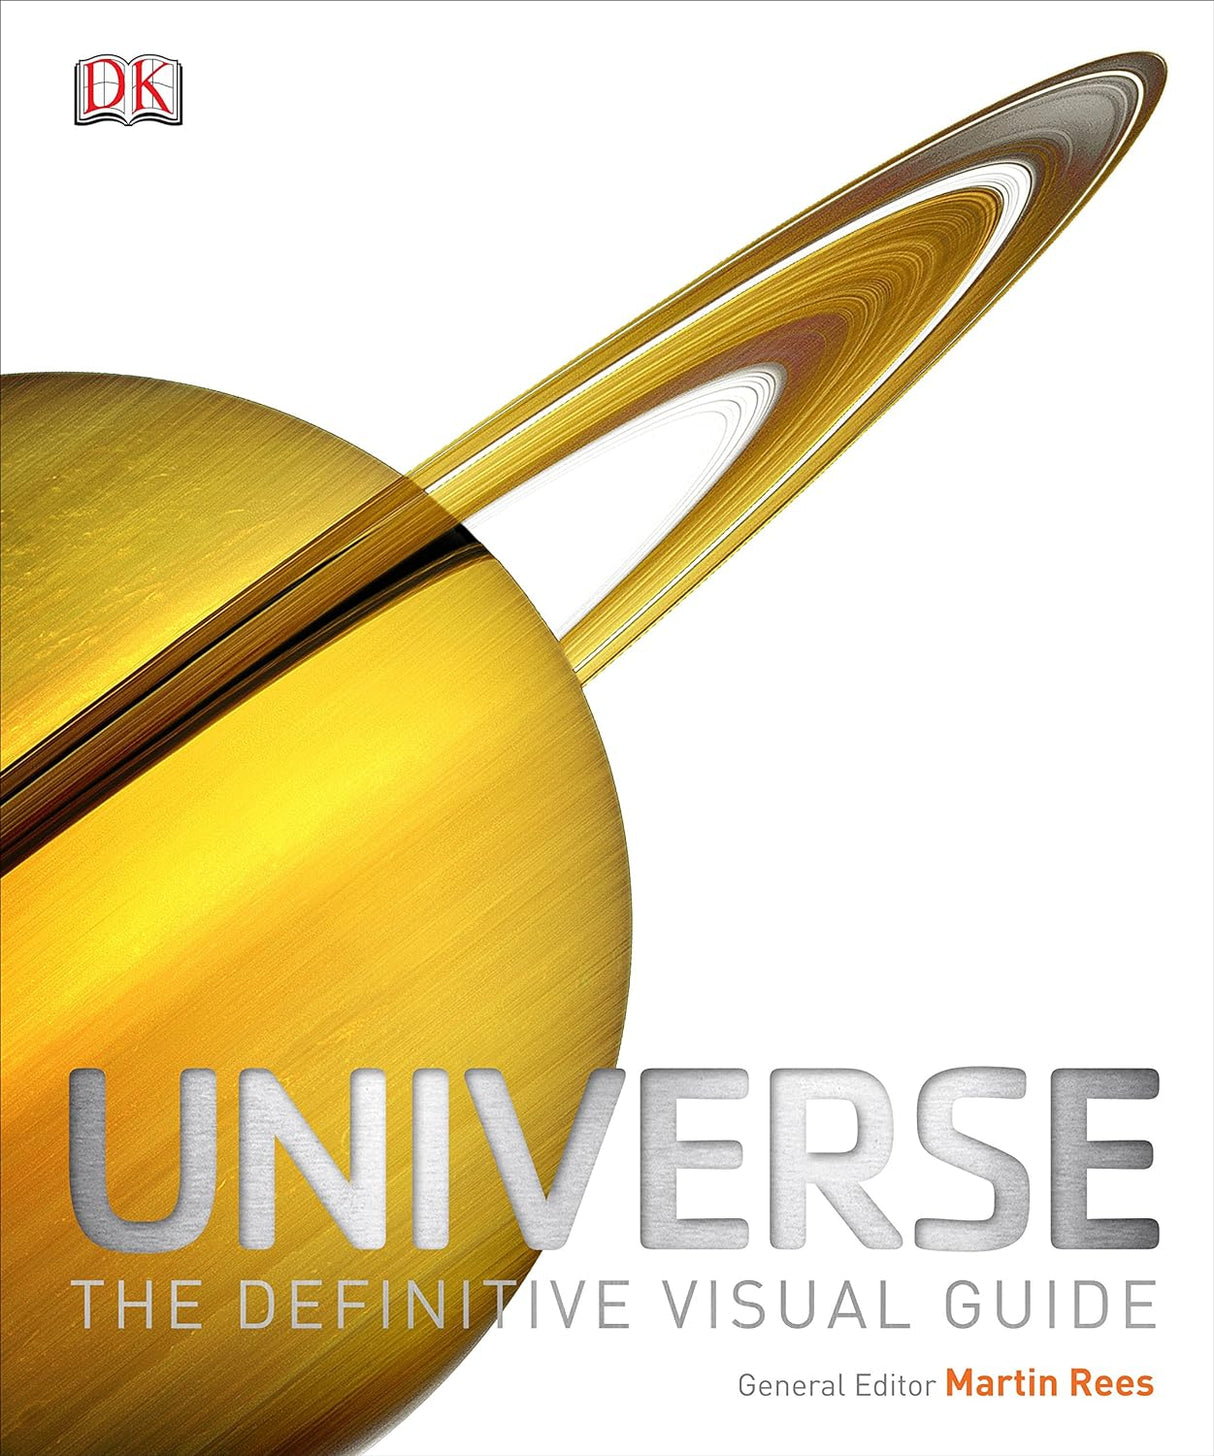 Universe Hardcover